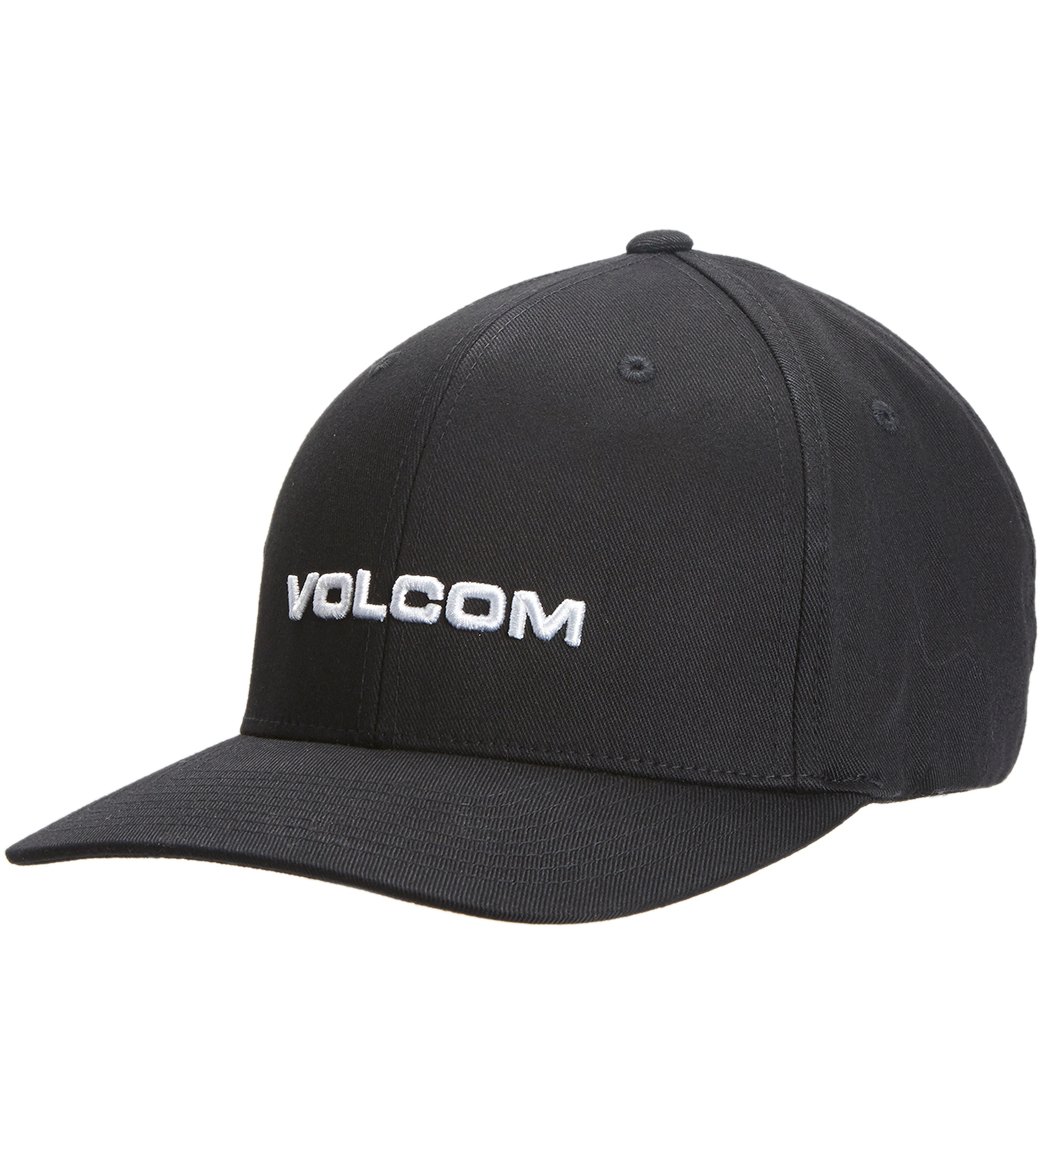 Volcom Men's Euro Xfit Hat - New Black Small/Medium Cotton/Polyester - Swimoutlet.com